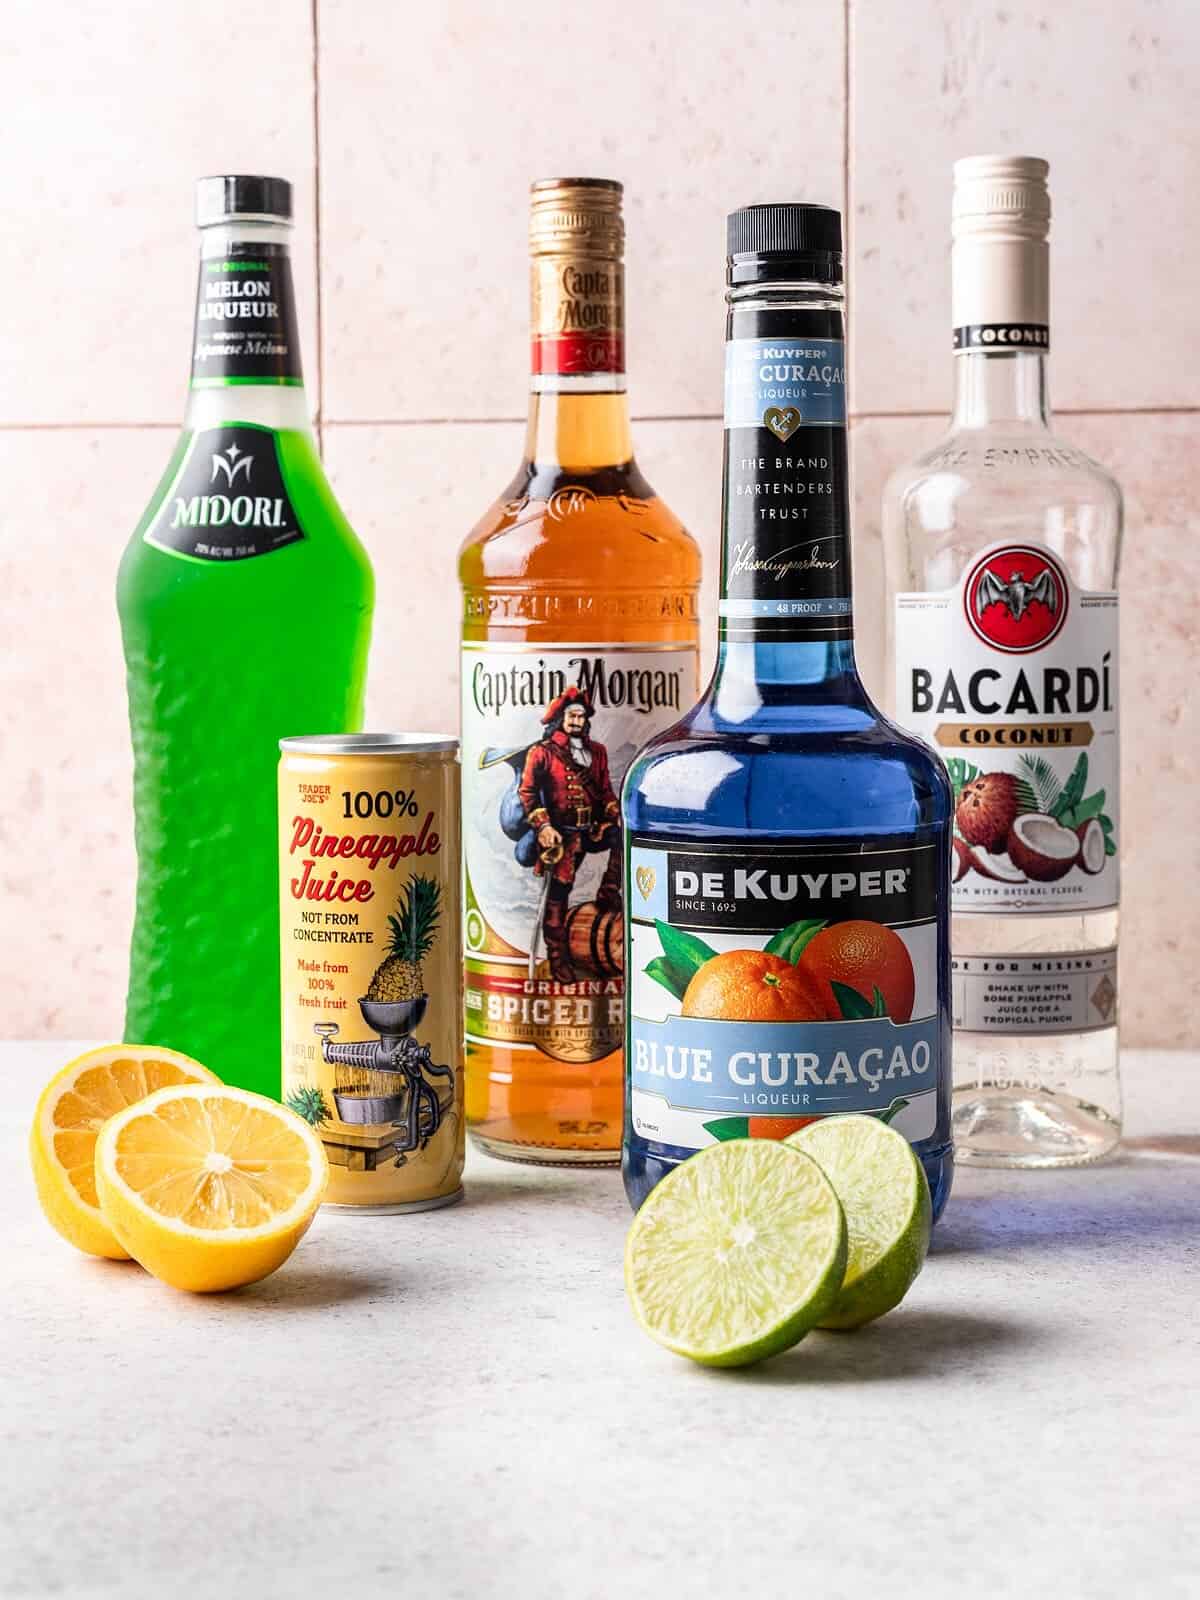 Ingredients to make liquid marijuana cocktail.